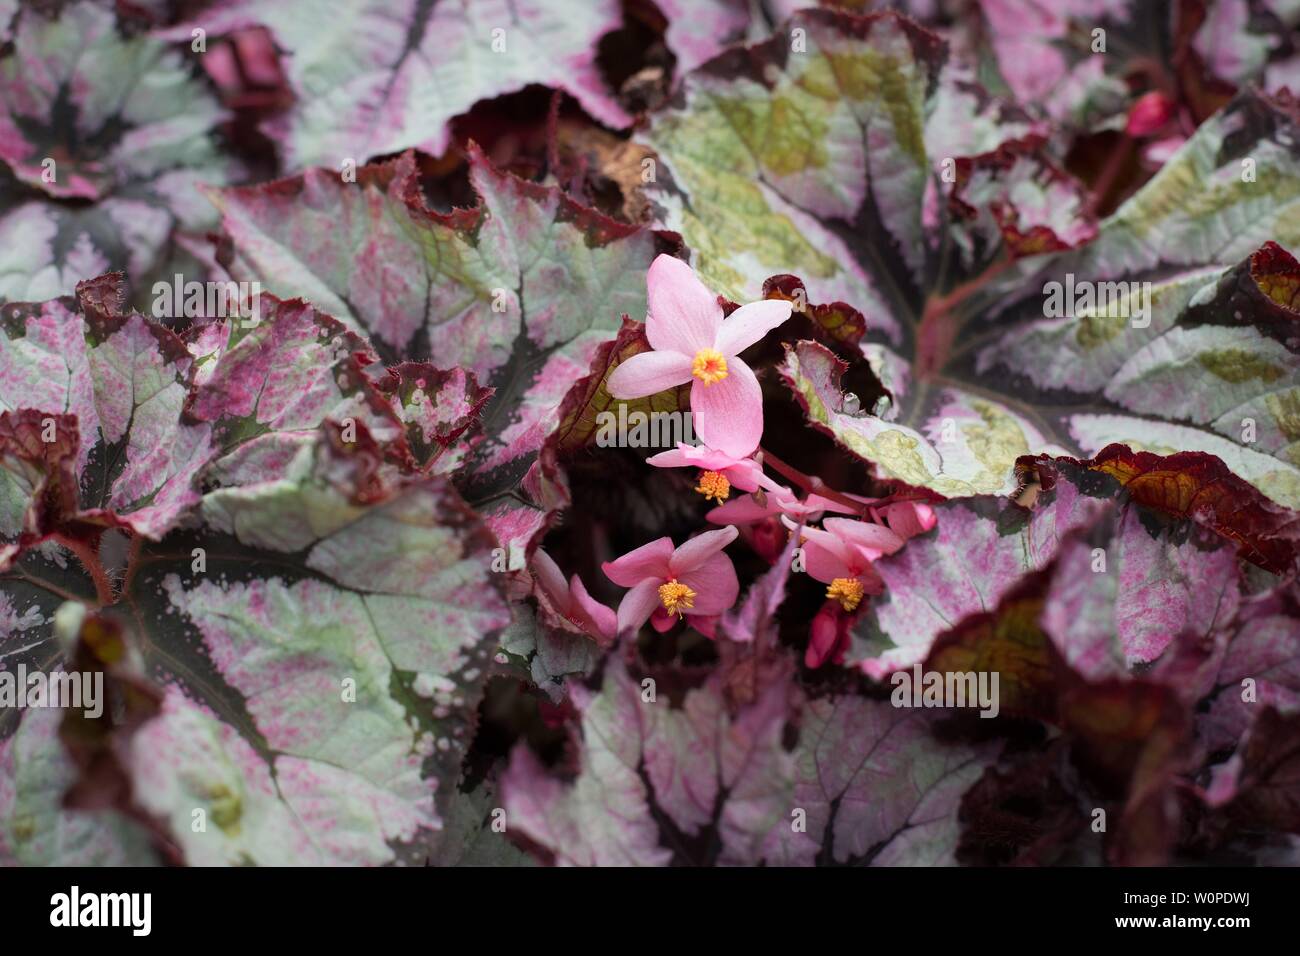 Begonia de hoja pintada fotografías e imágenes de alta resolución - Alamy